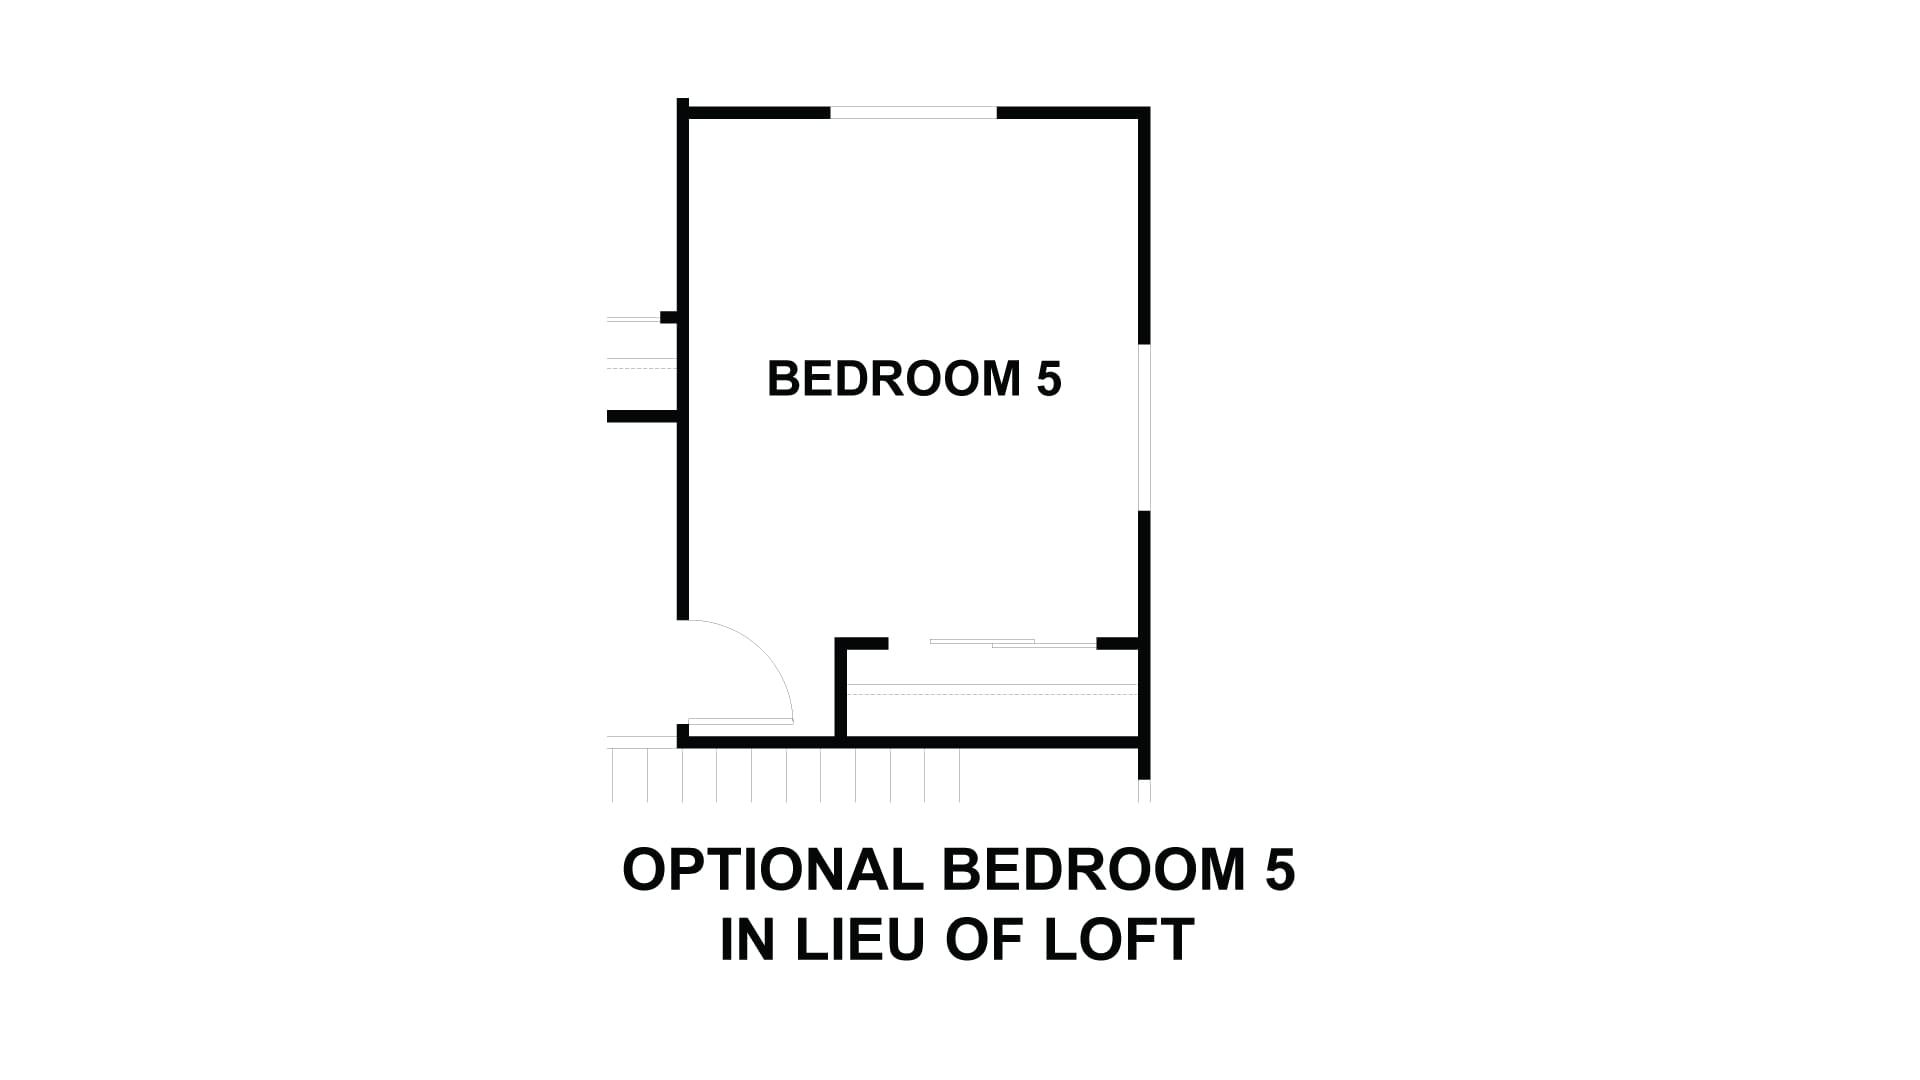 Optional Bedroom 5 in lieu of Loft. 2,169sf New Home in Costa Mesa, CA